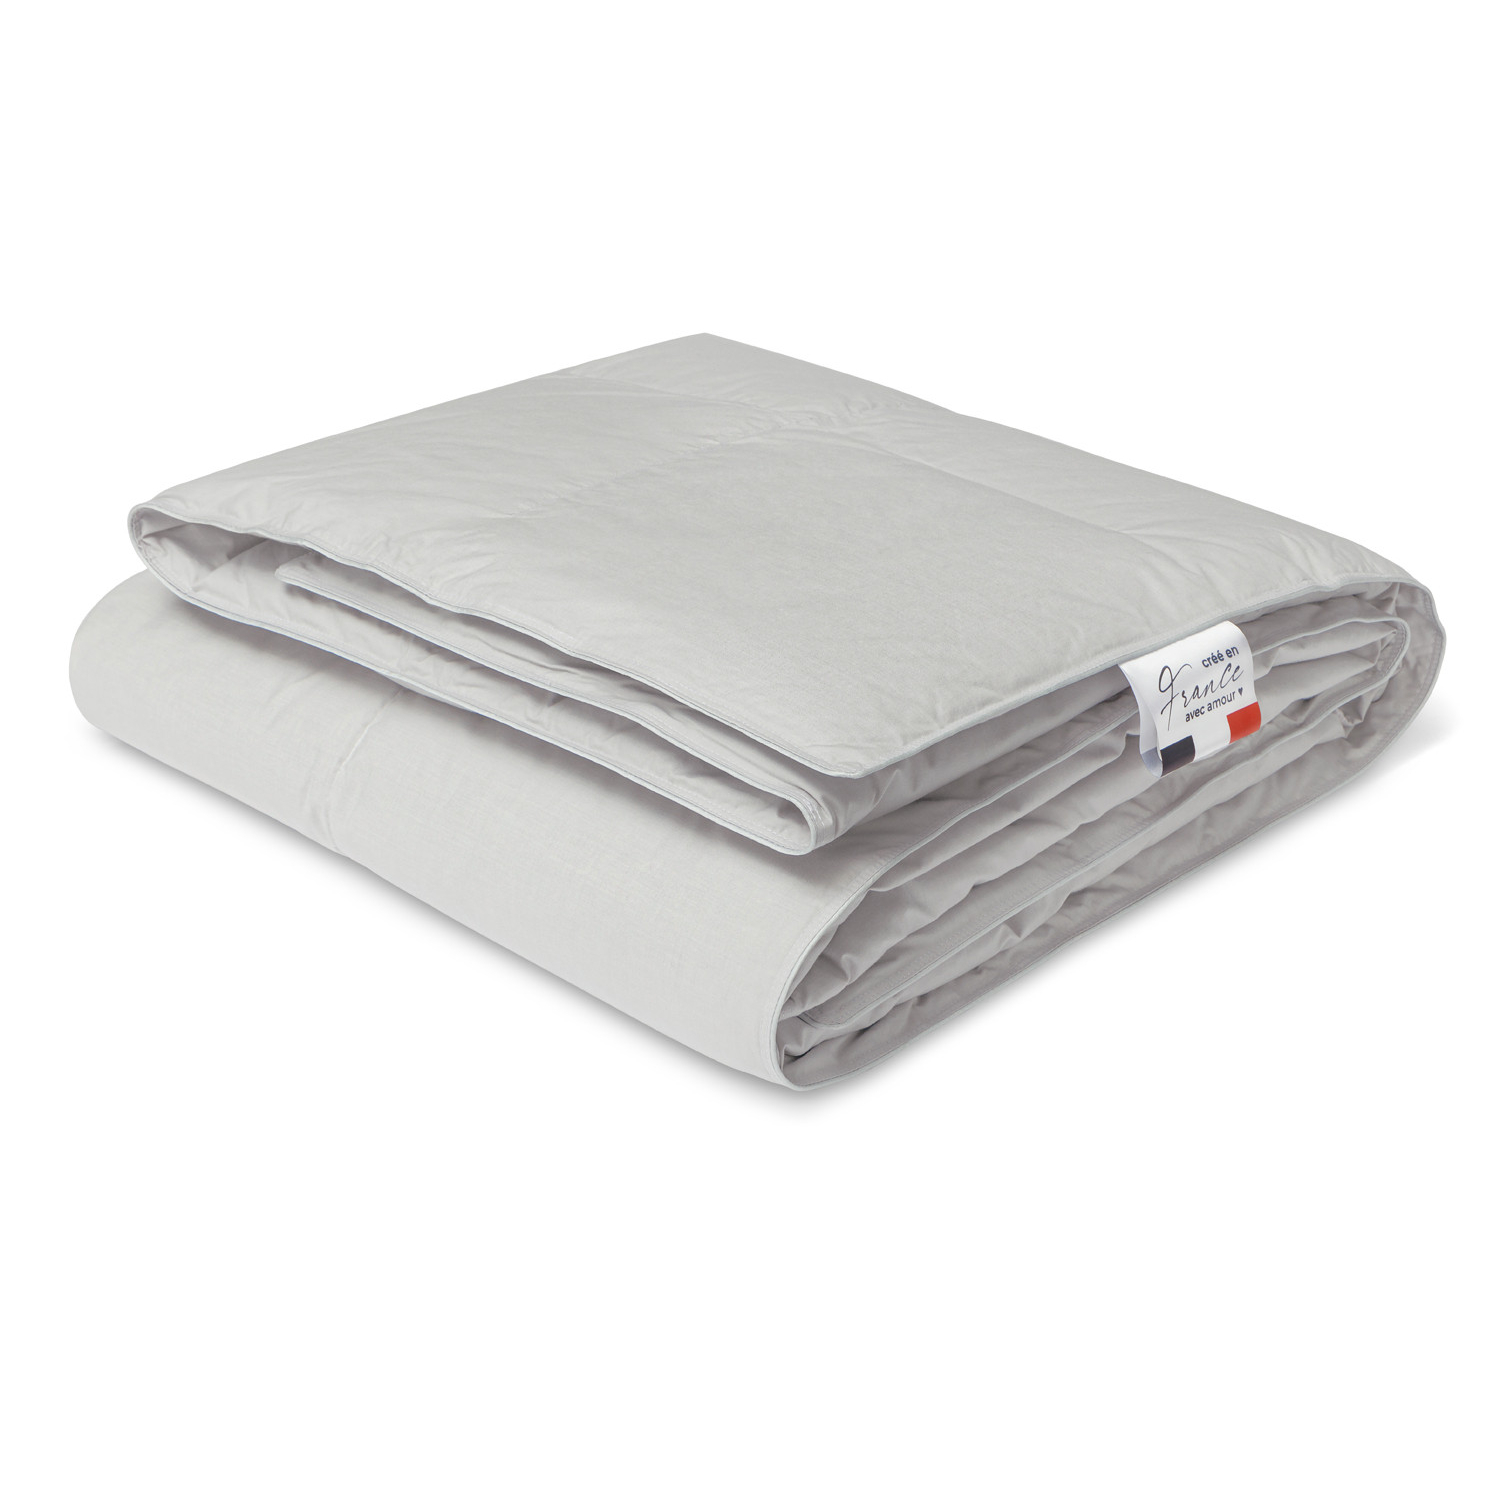 Пуховое одеяло Marc Anri Bretagne серое 200х220 см (МН2076) одеяло marc anri rouffach белое 200х220 см ma ec